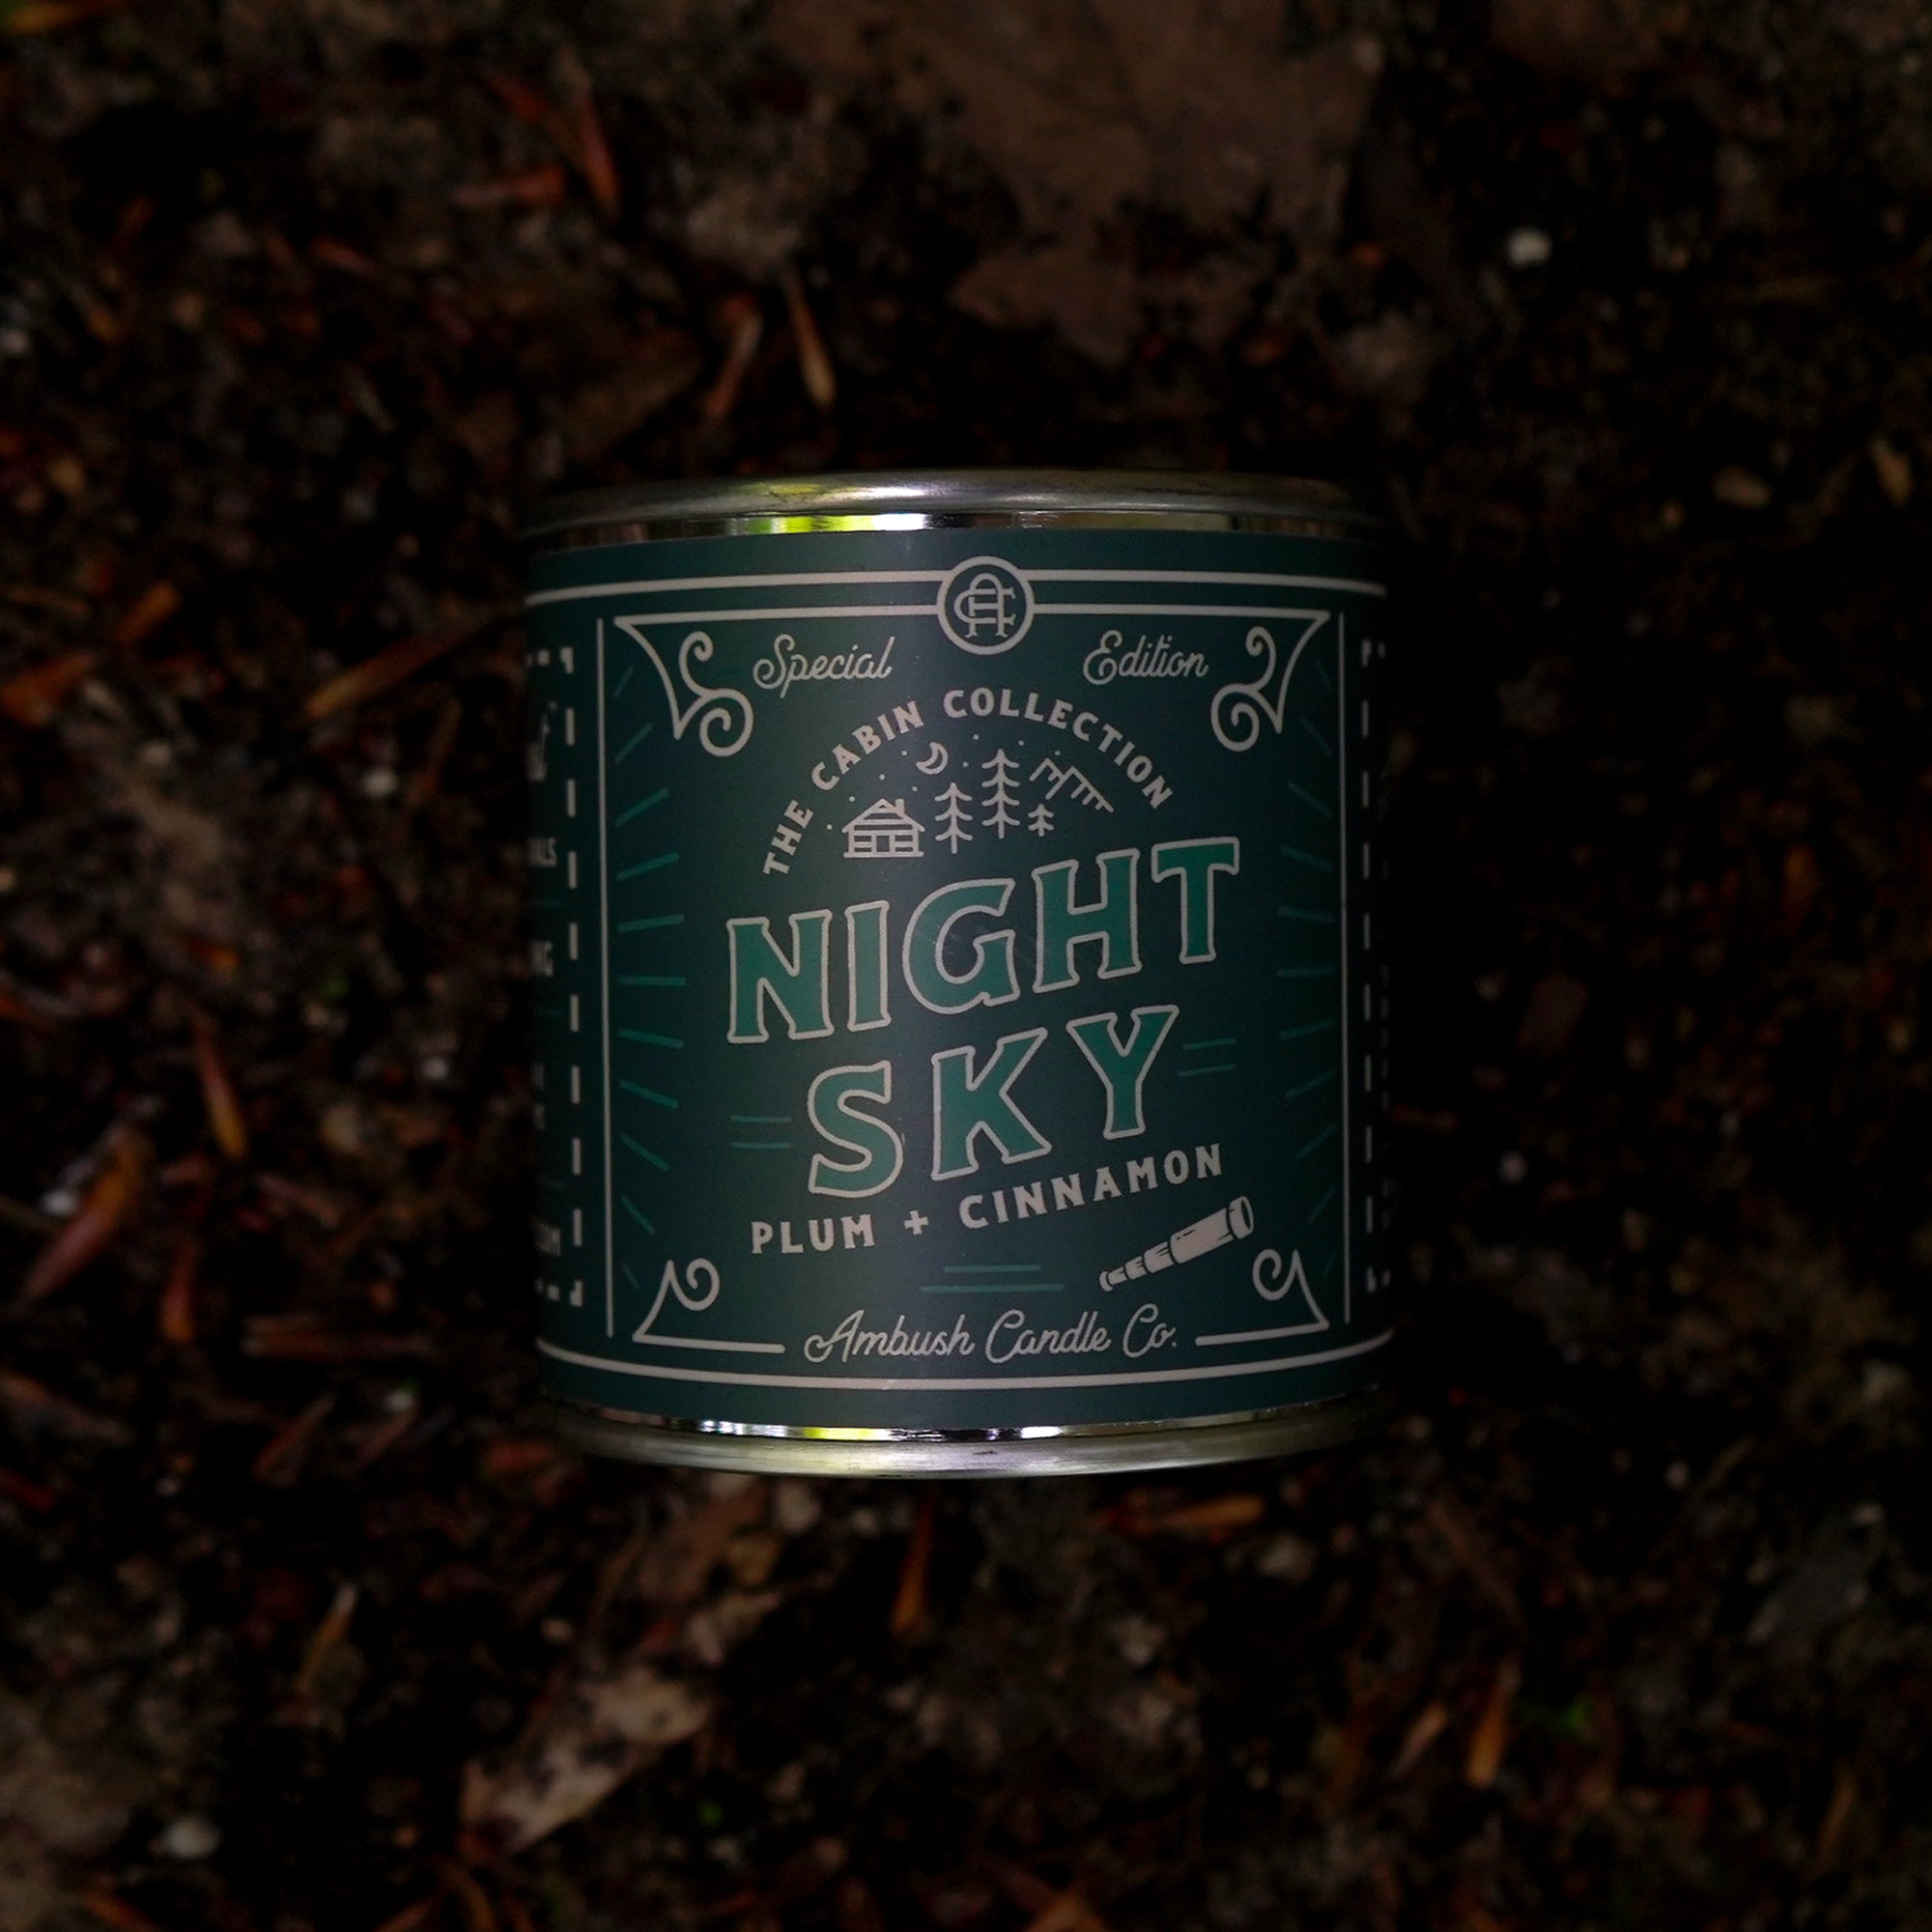 Ambush Candle Co. 8oz 'Night Sky' Soy Candle - Plum / Cinnamon